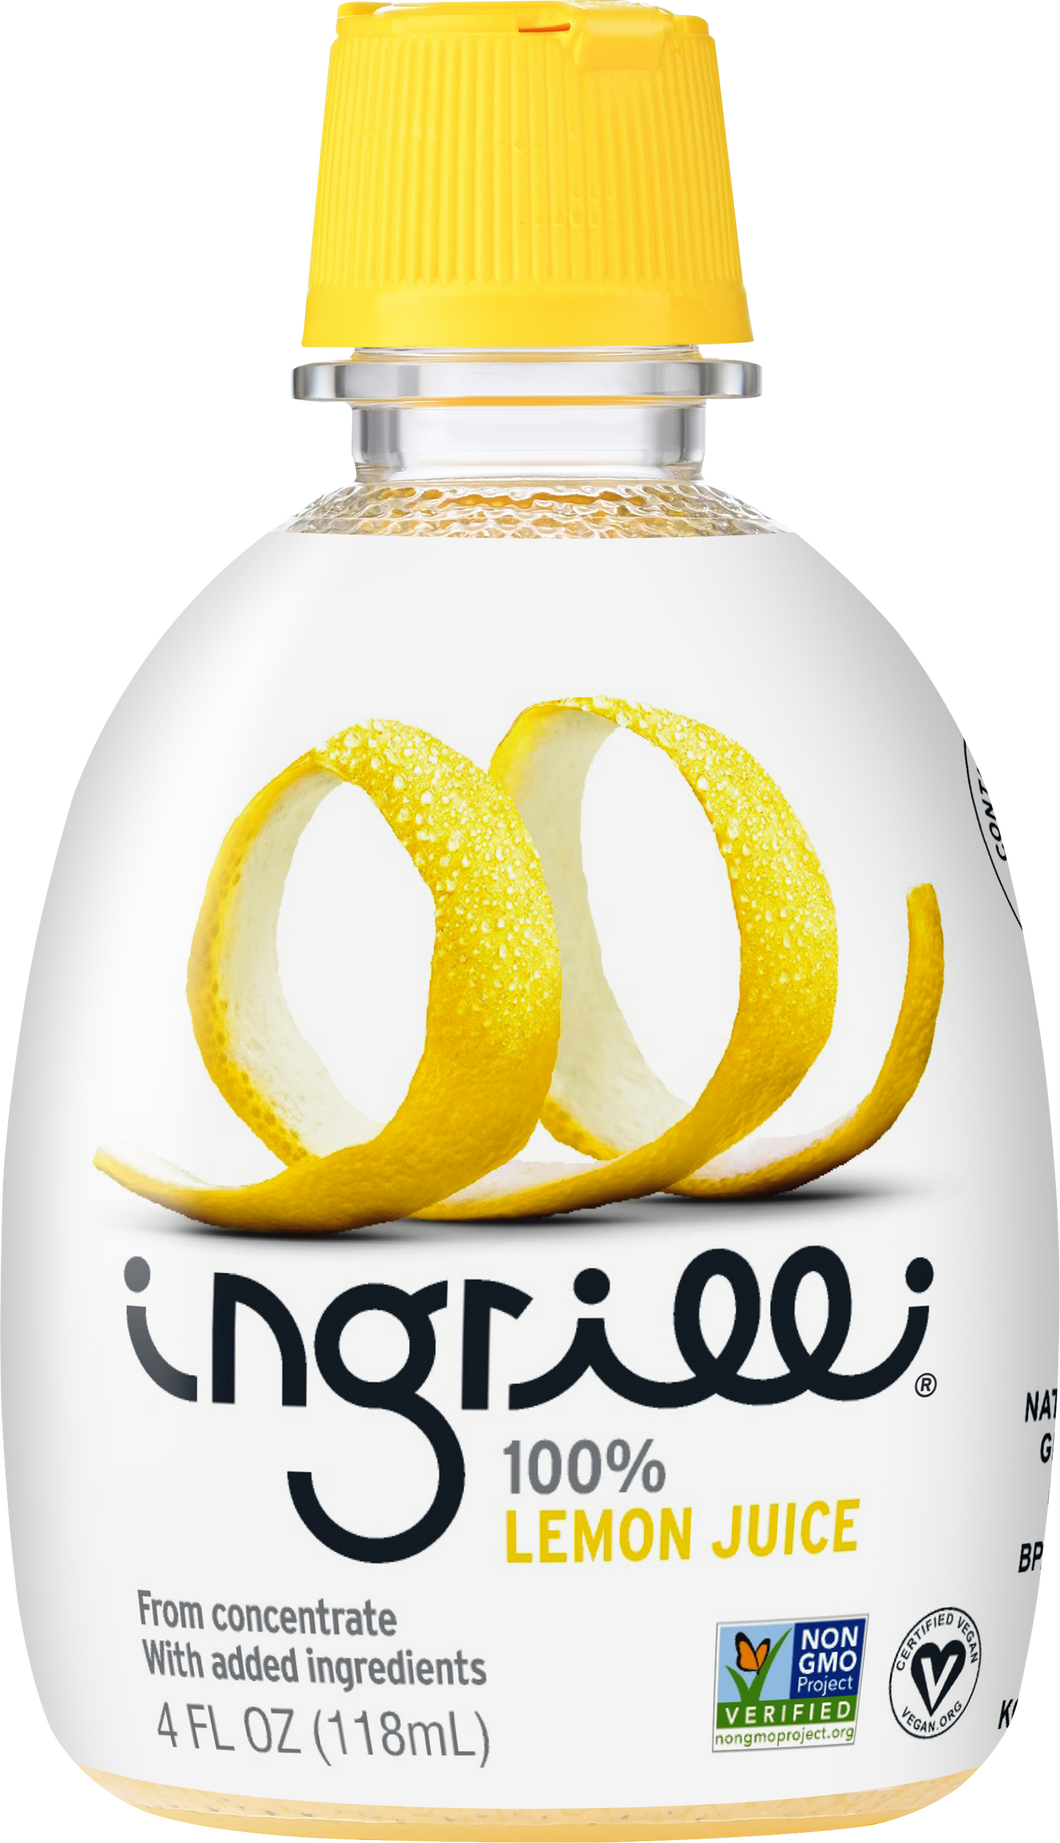 Ingrilli 100% Lemon Juice (from concentrate), 4 Fl Oz - Multi Pack